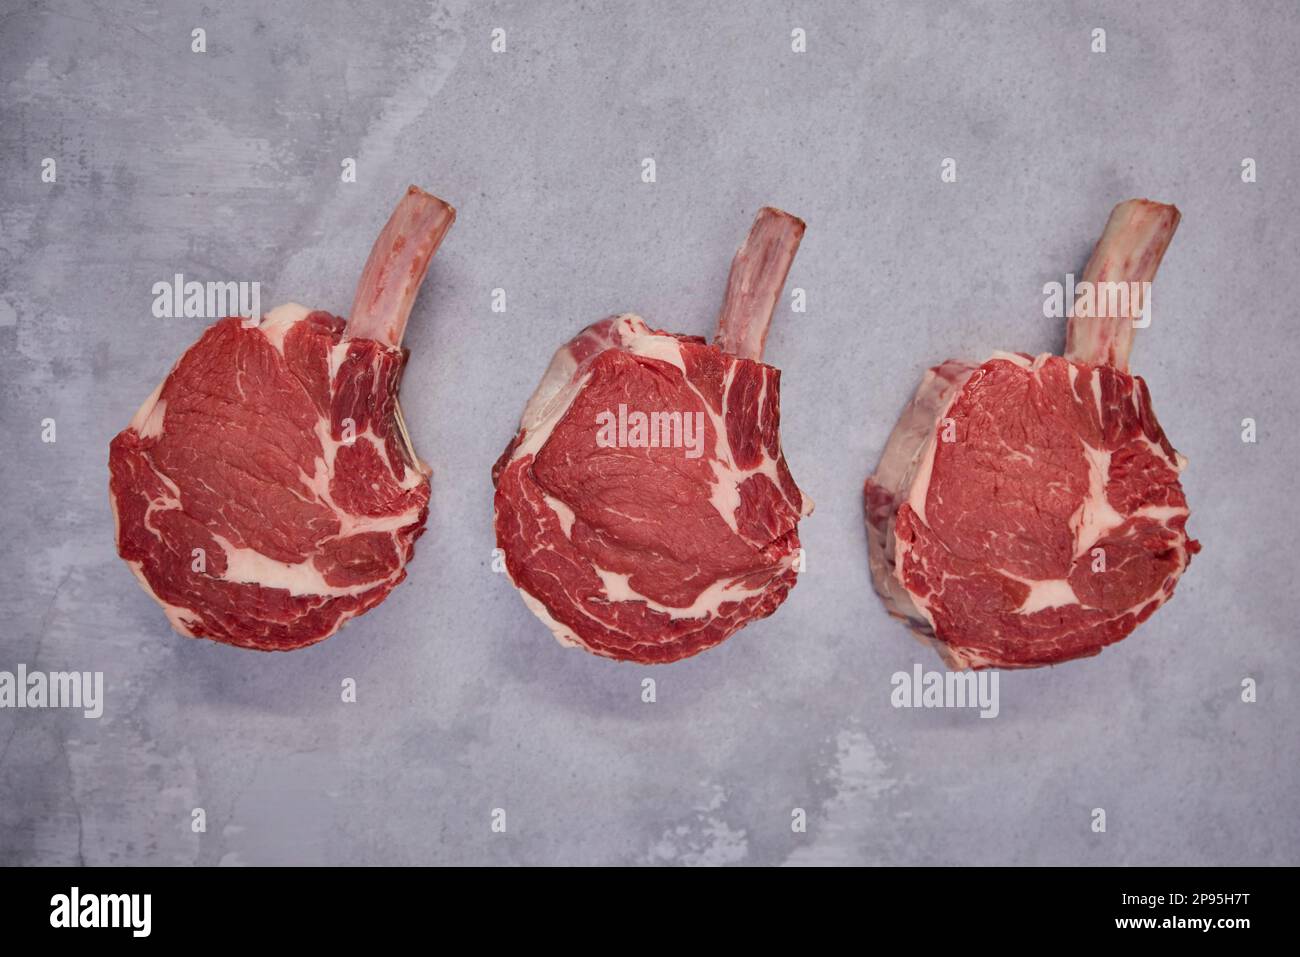 Overhead Shot Of Tomahawk Beef Steaks On Background In Butcher's Shop Display Stock Photo